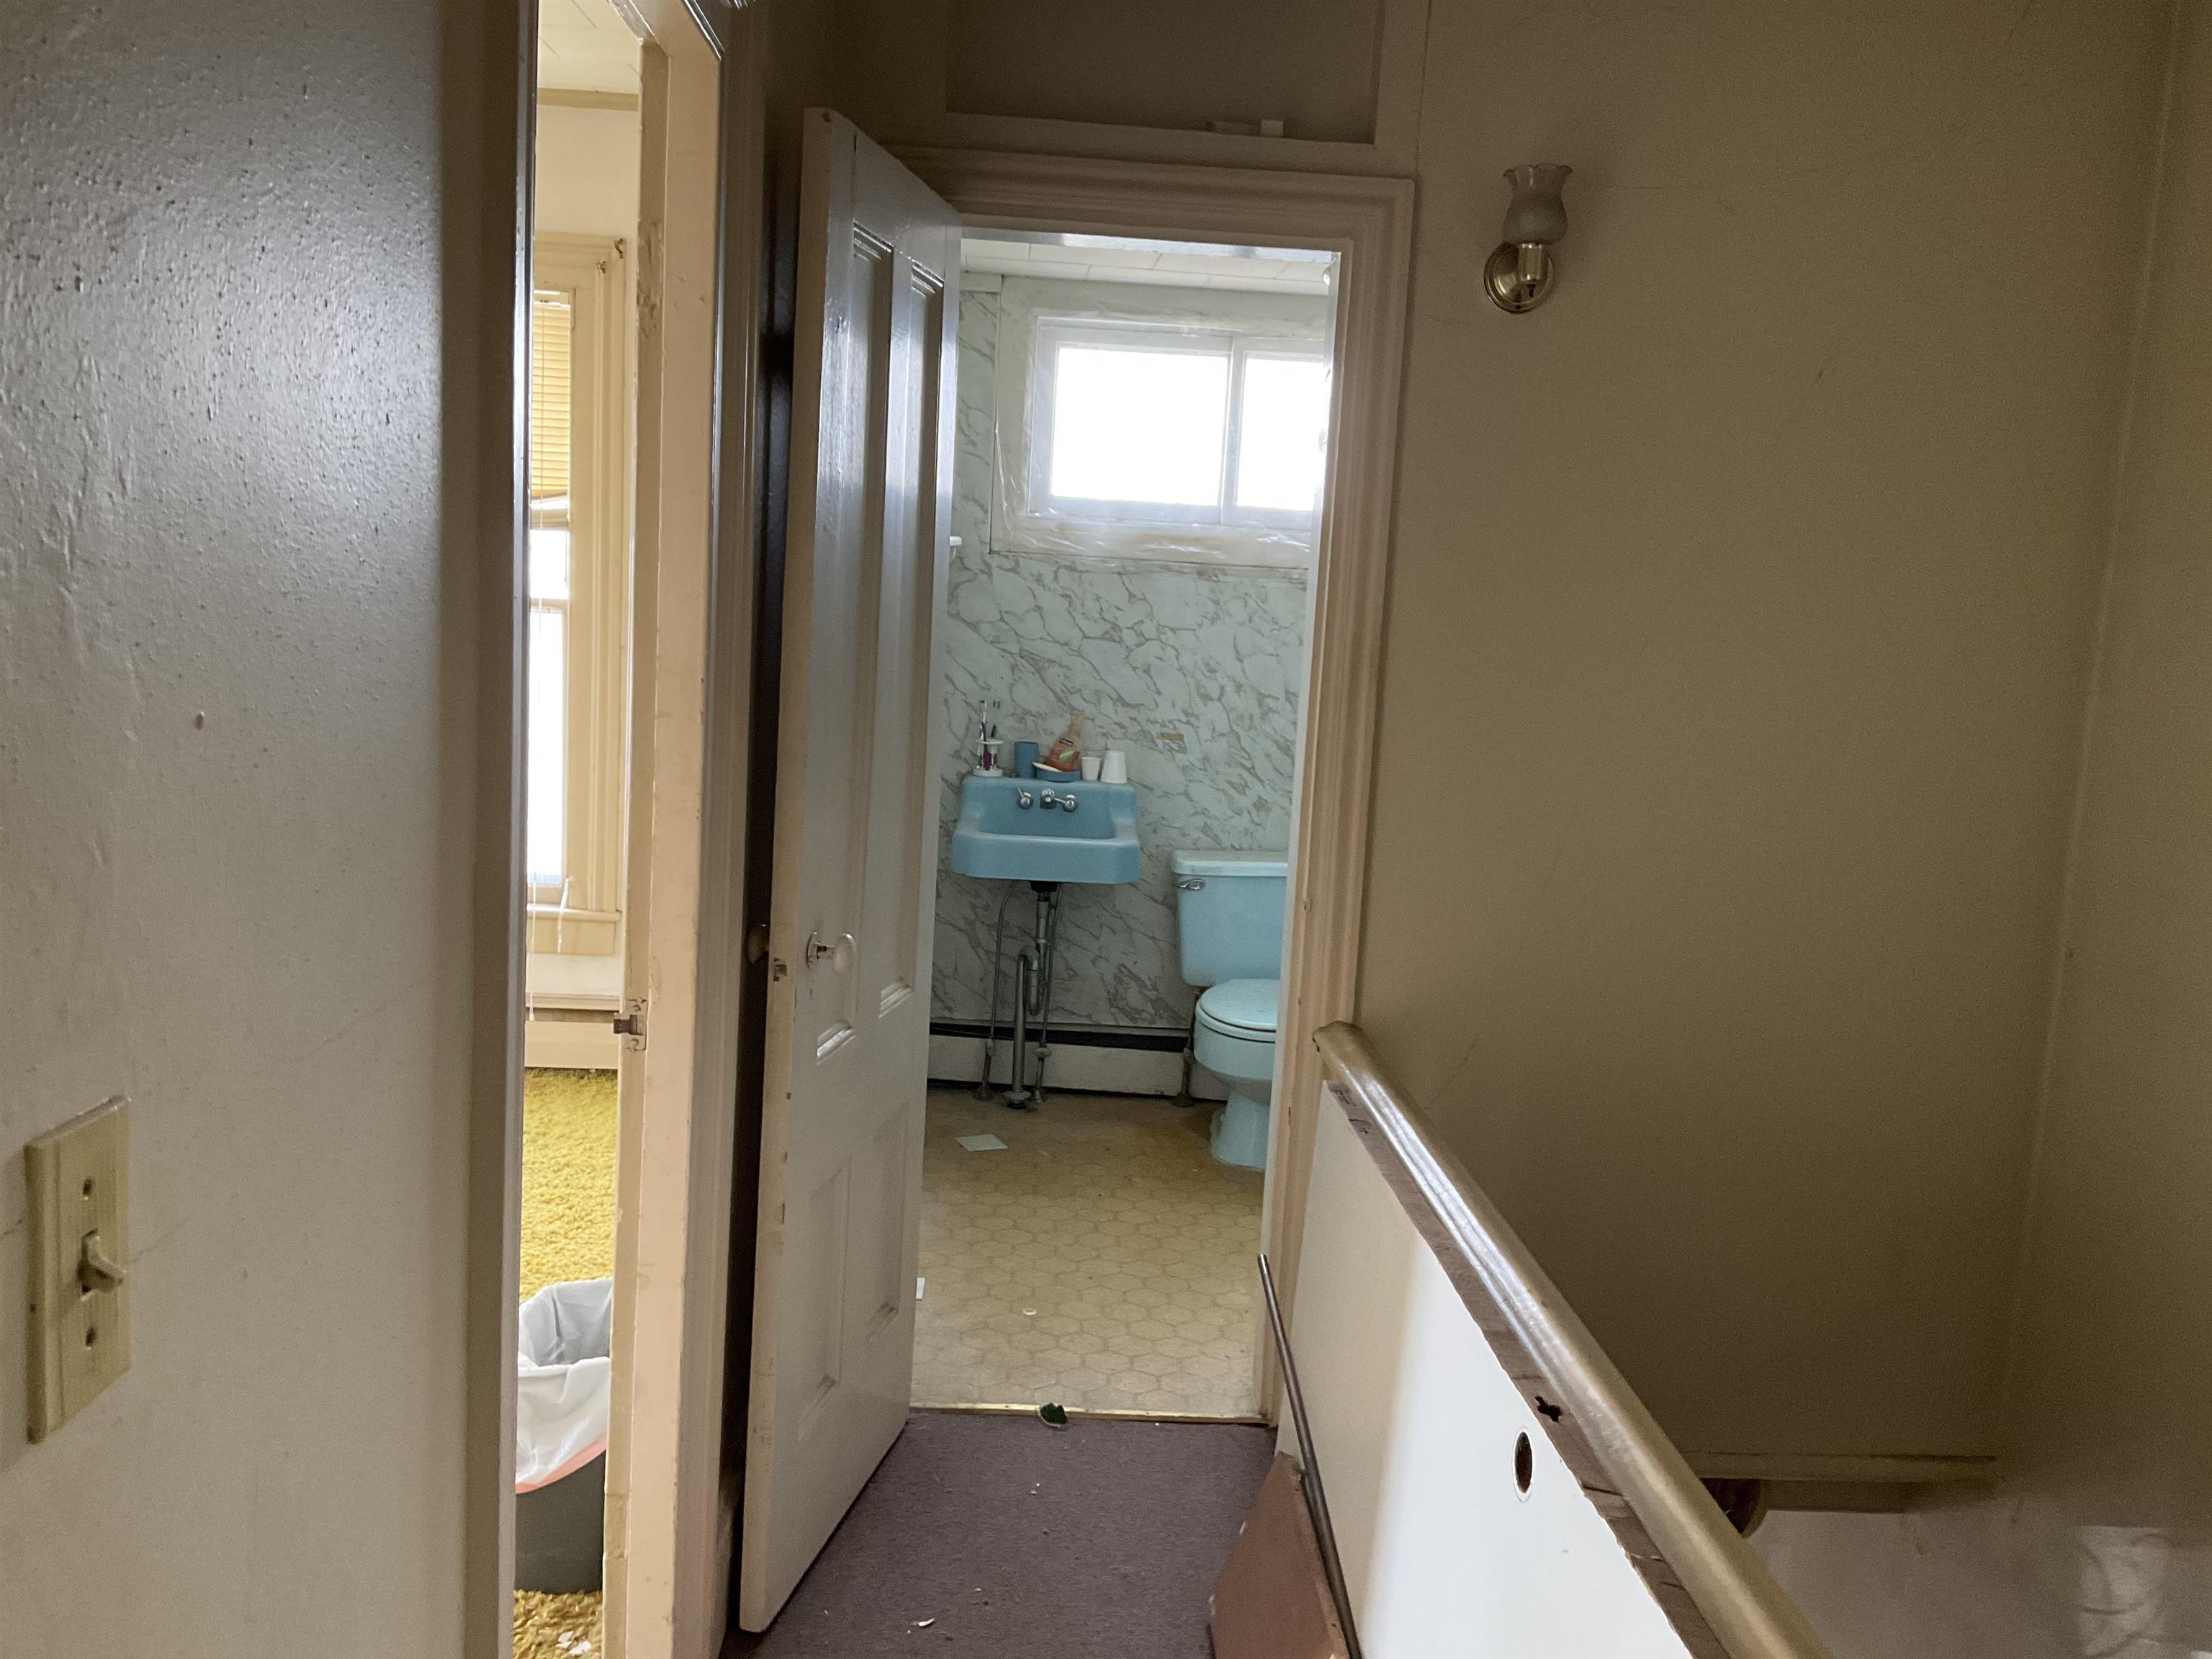 Hallway to Upstairs Bathroom